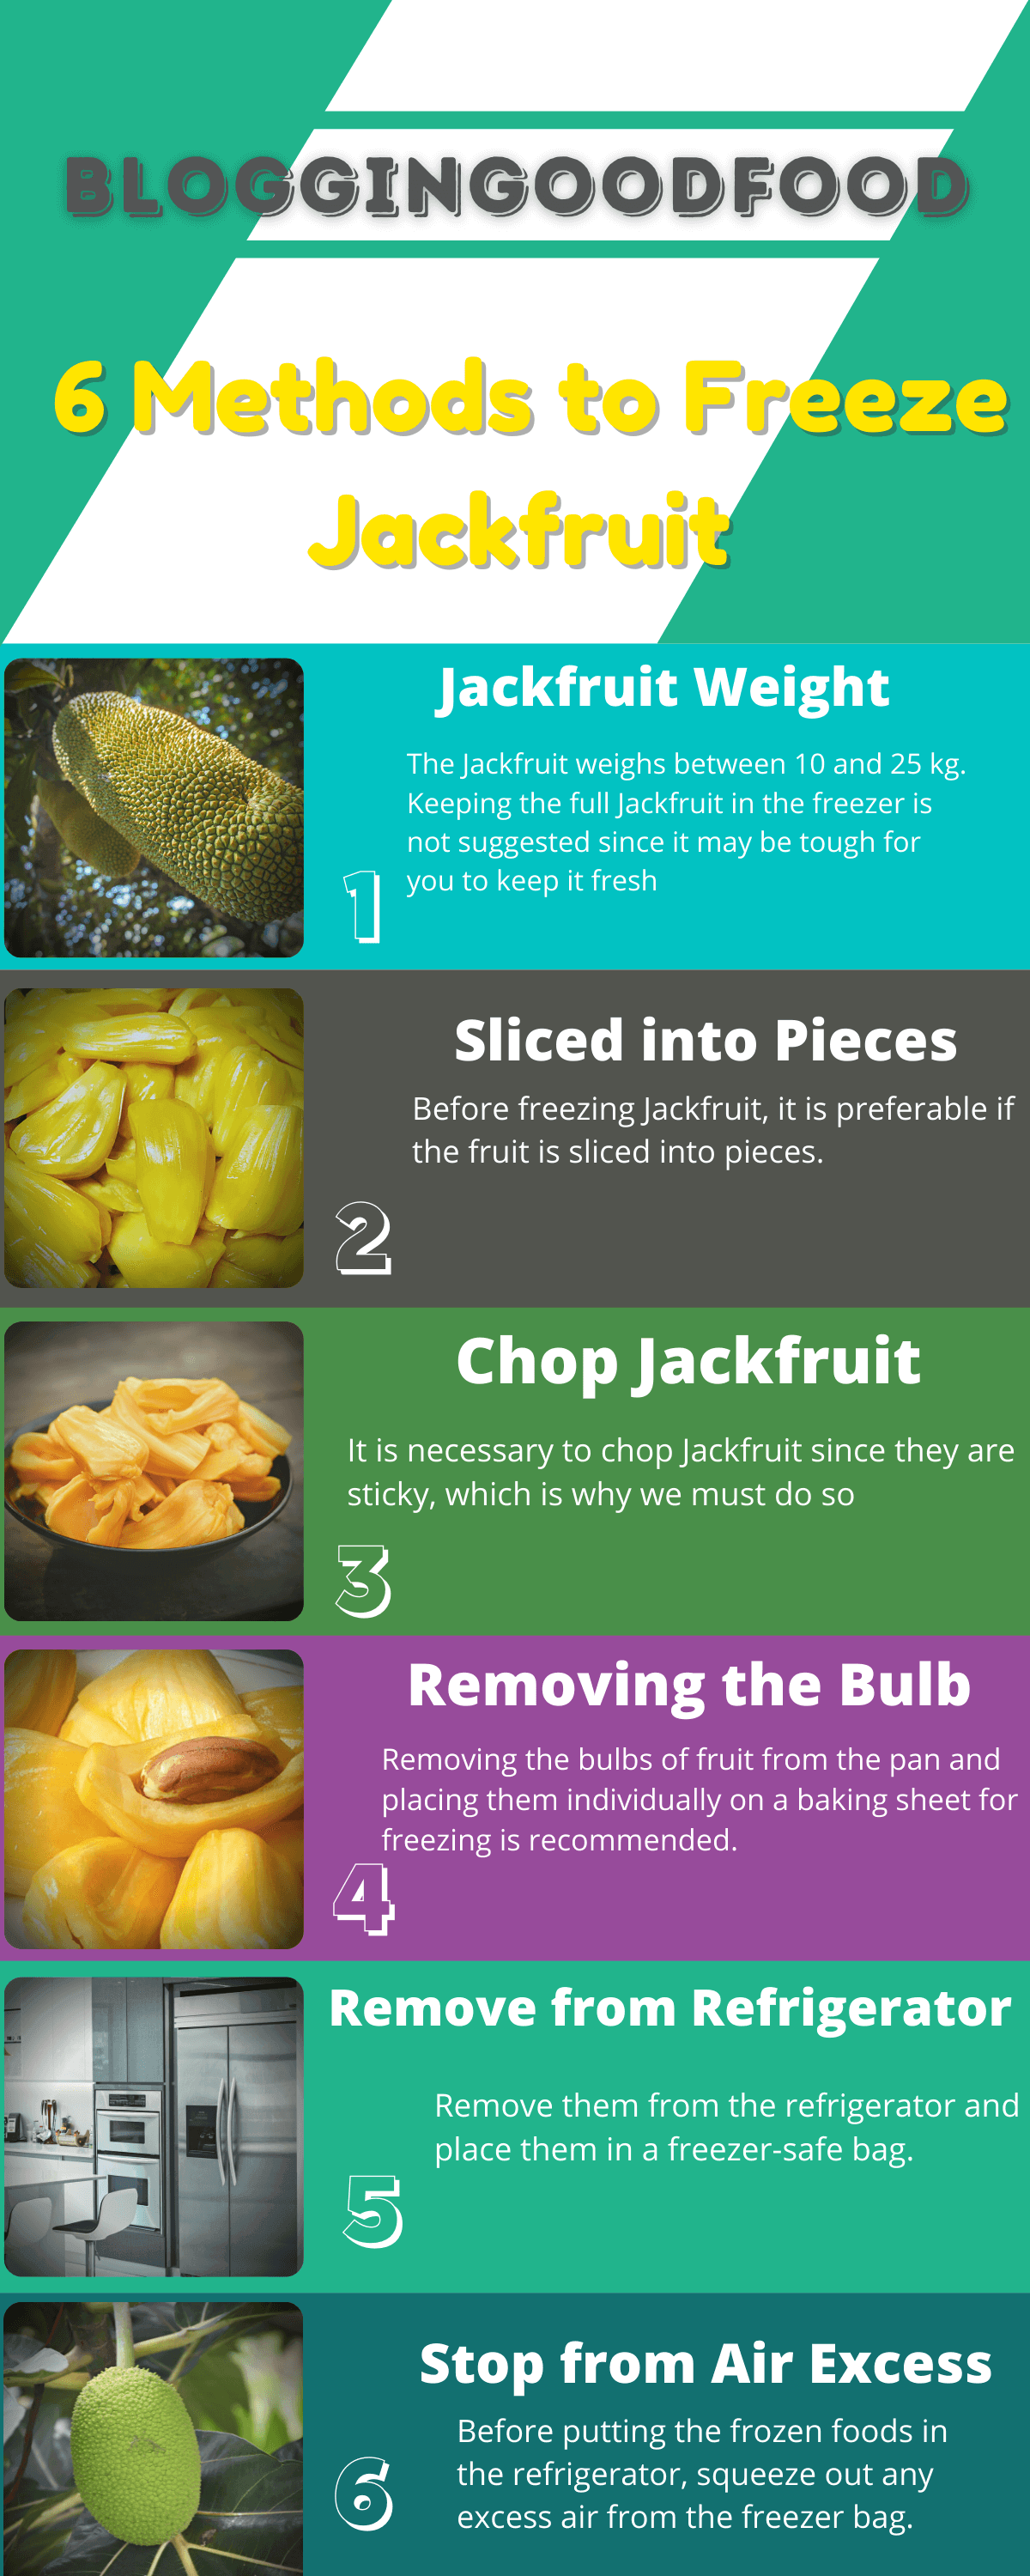 How to Freeze Jackfruit